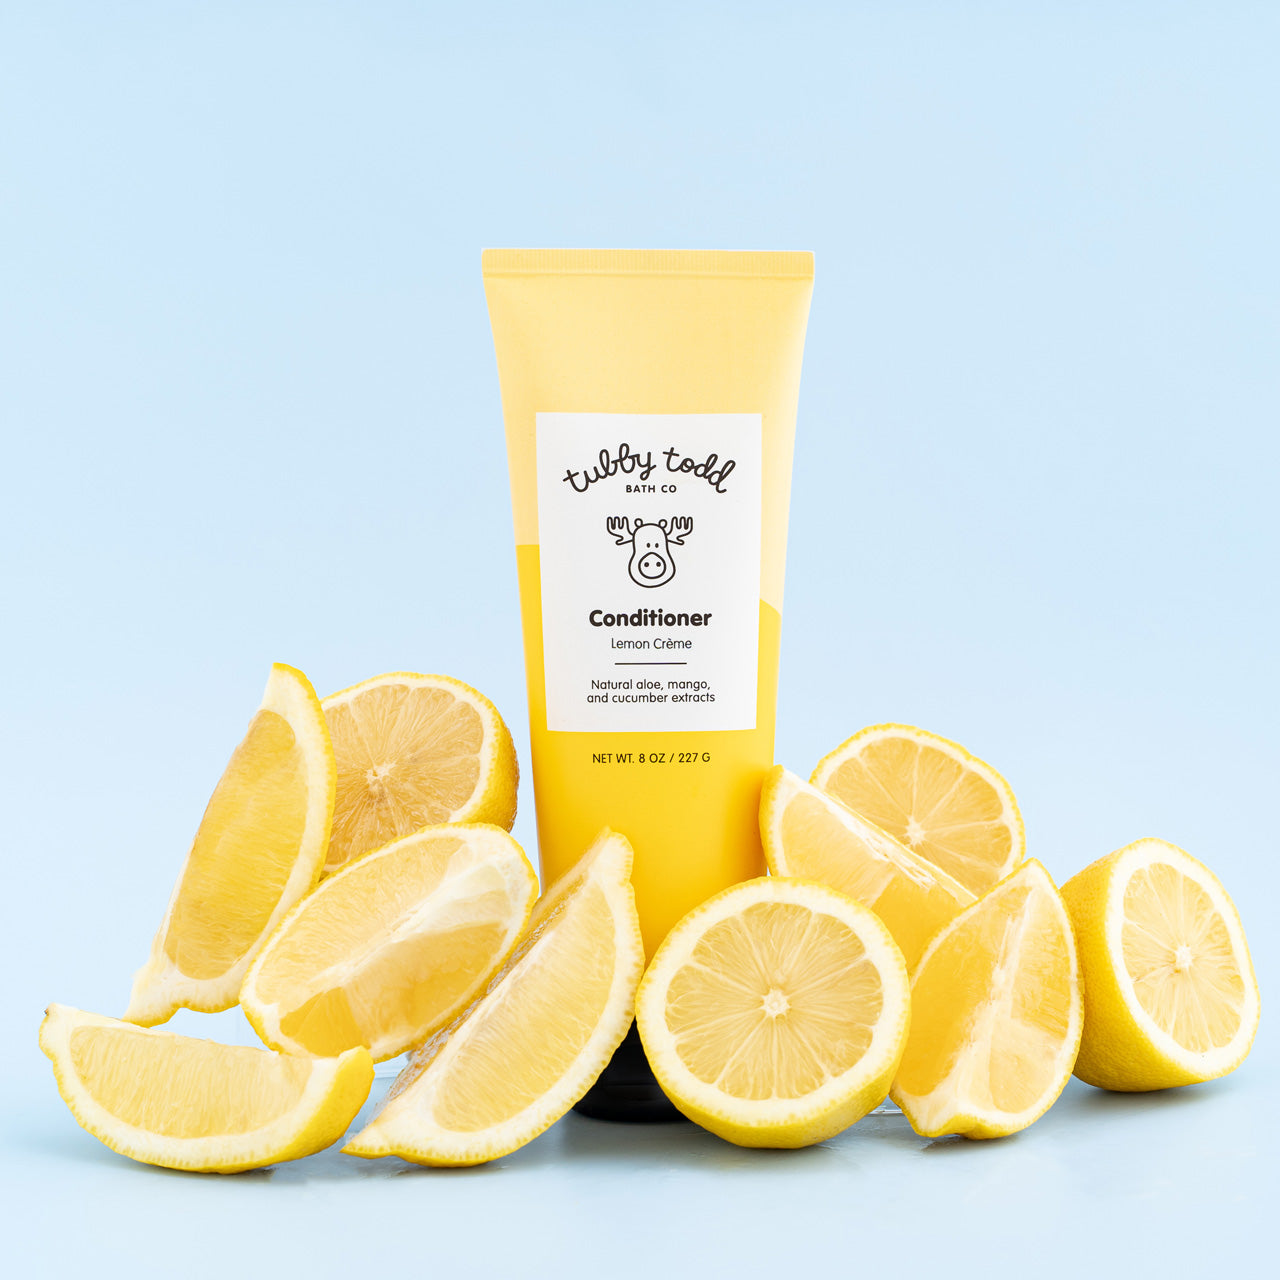 Lemon Crème Conditioner tube standing with lemons